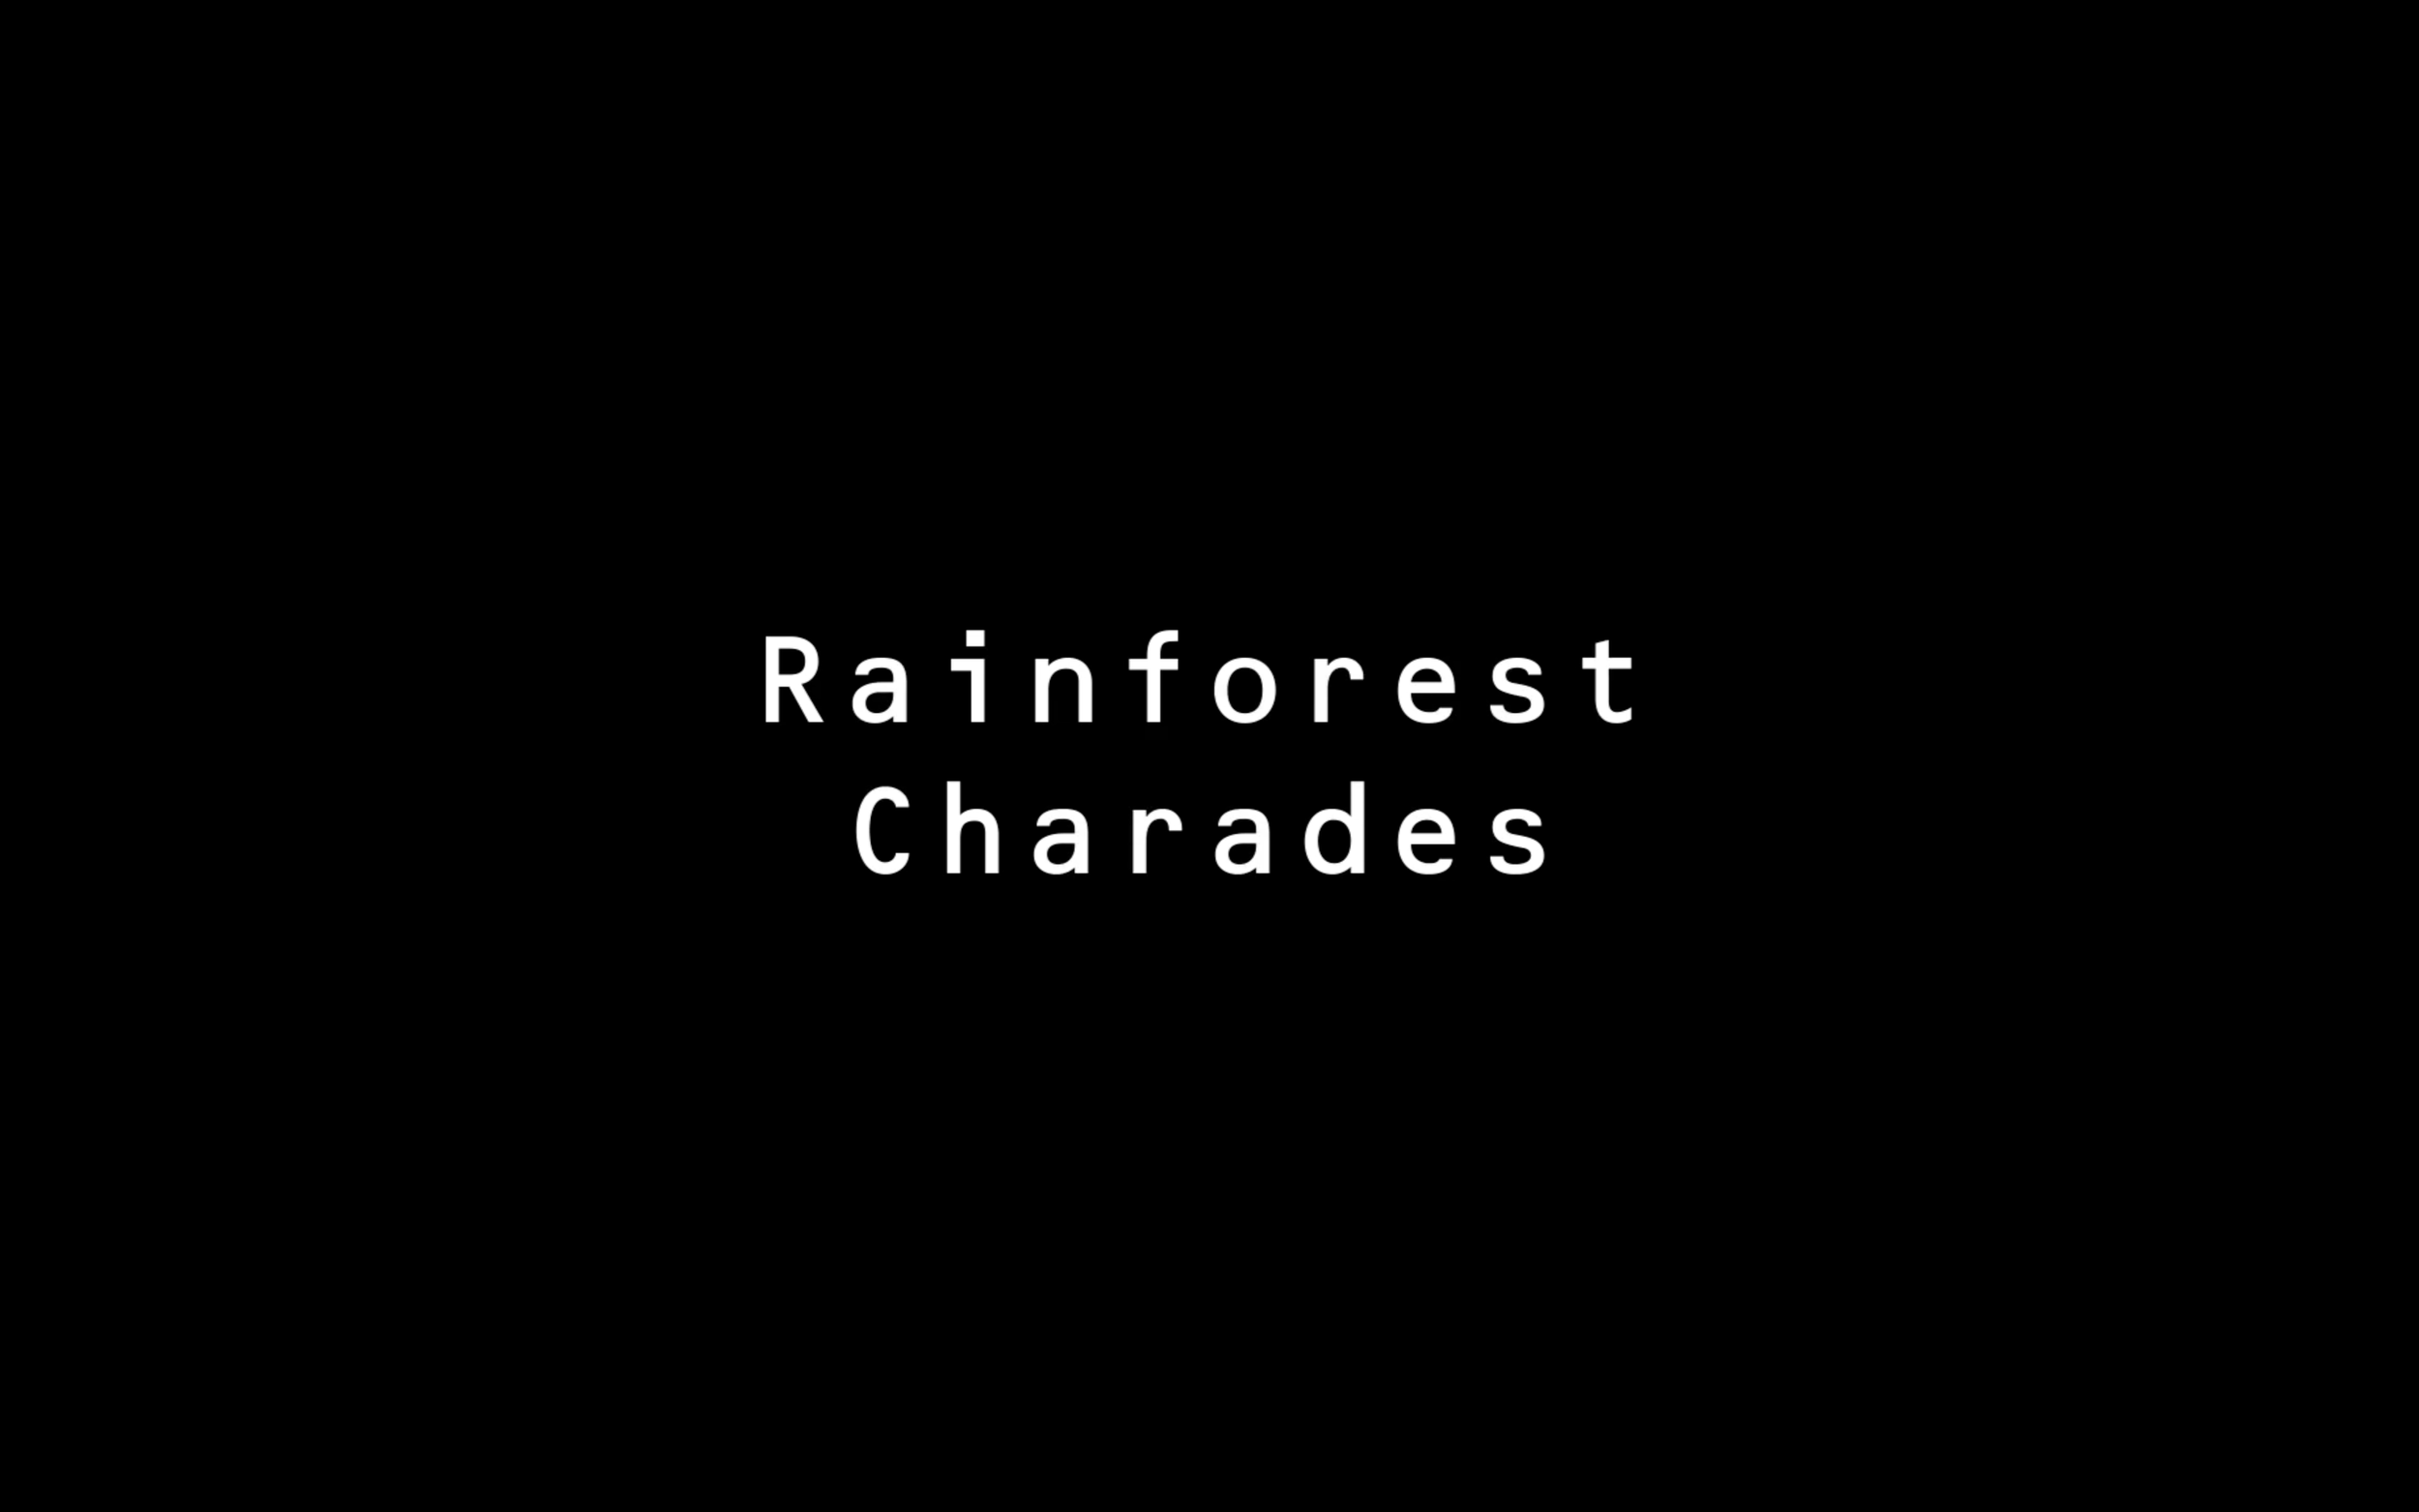 Rainforest charades